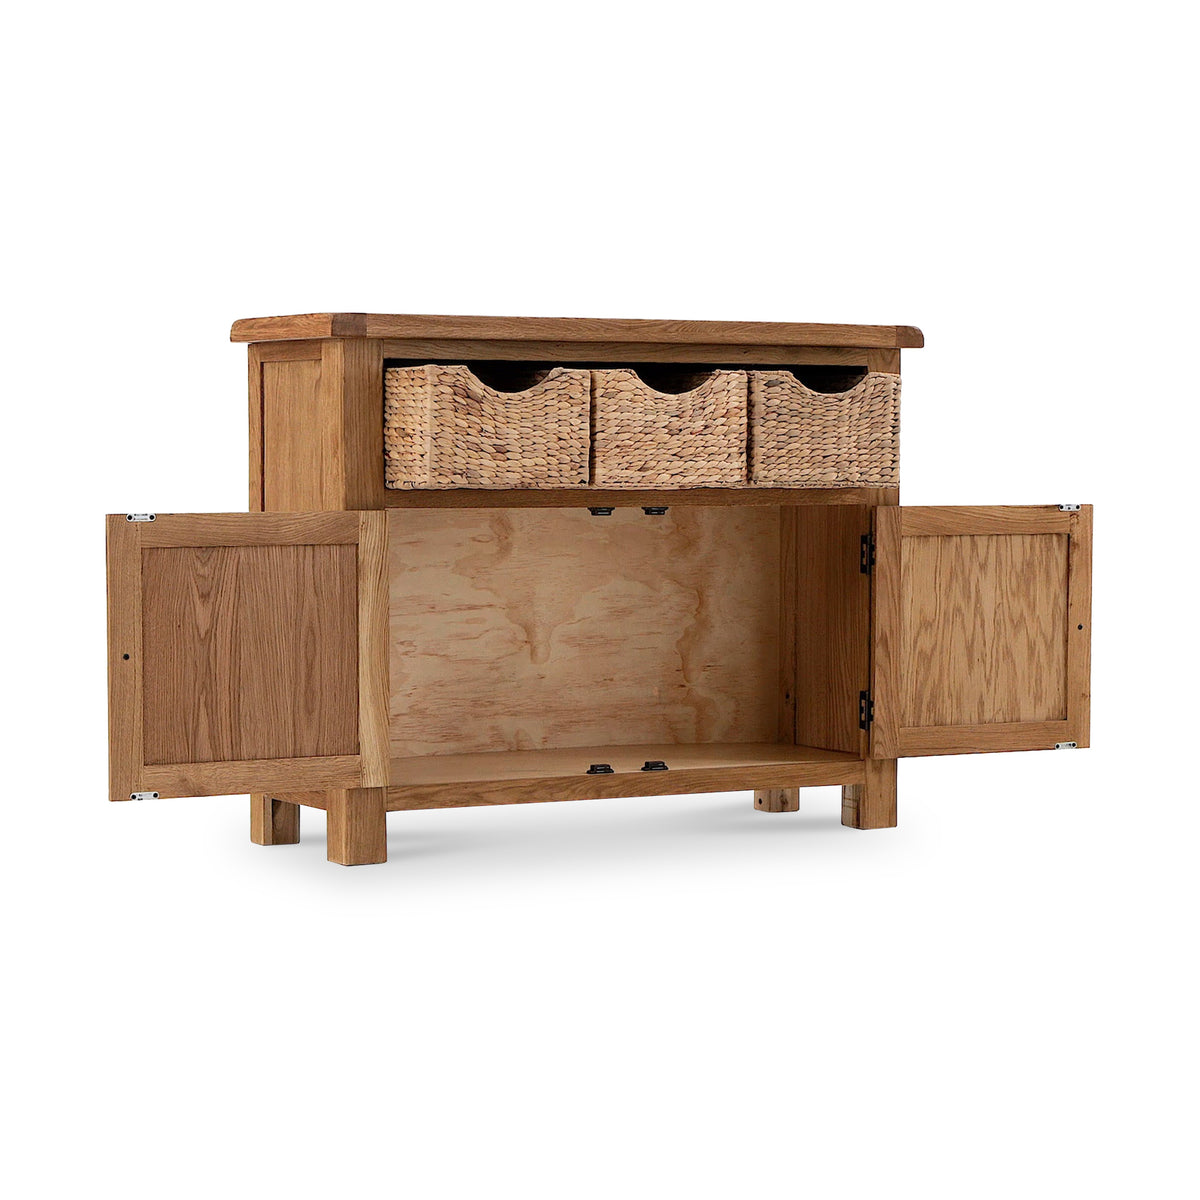 Zelah Oak Sideboard with Baskets from Roseland Furniture